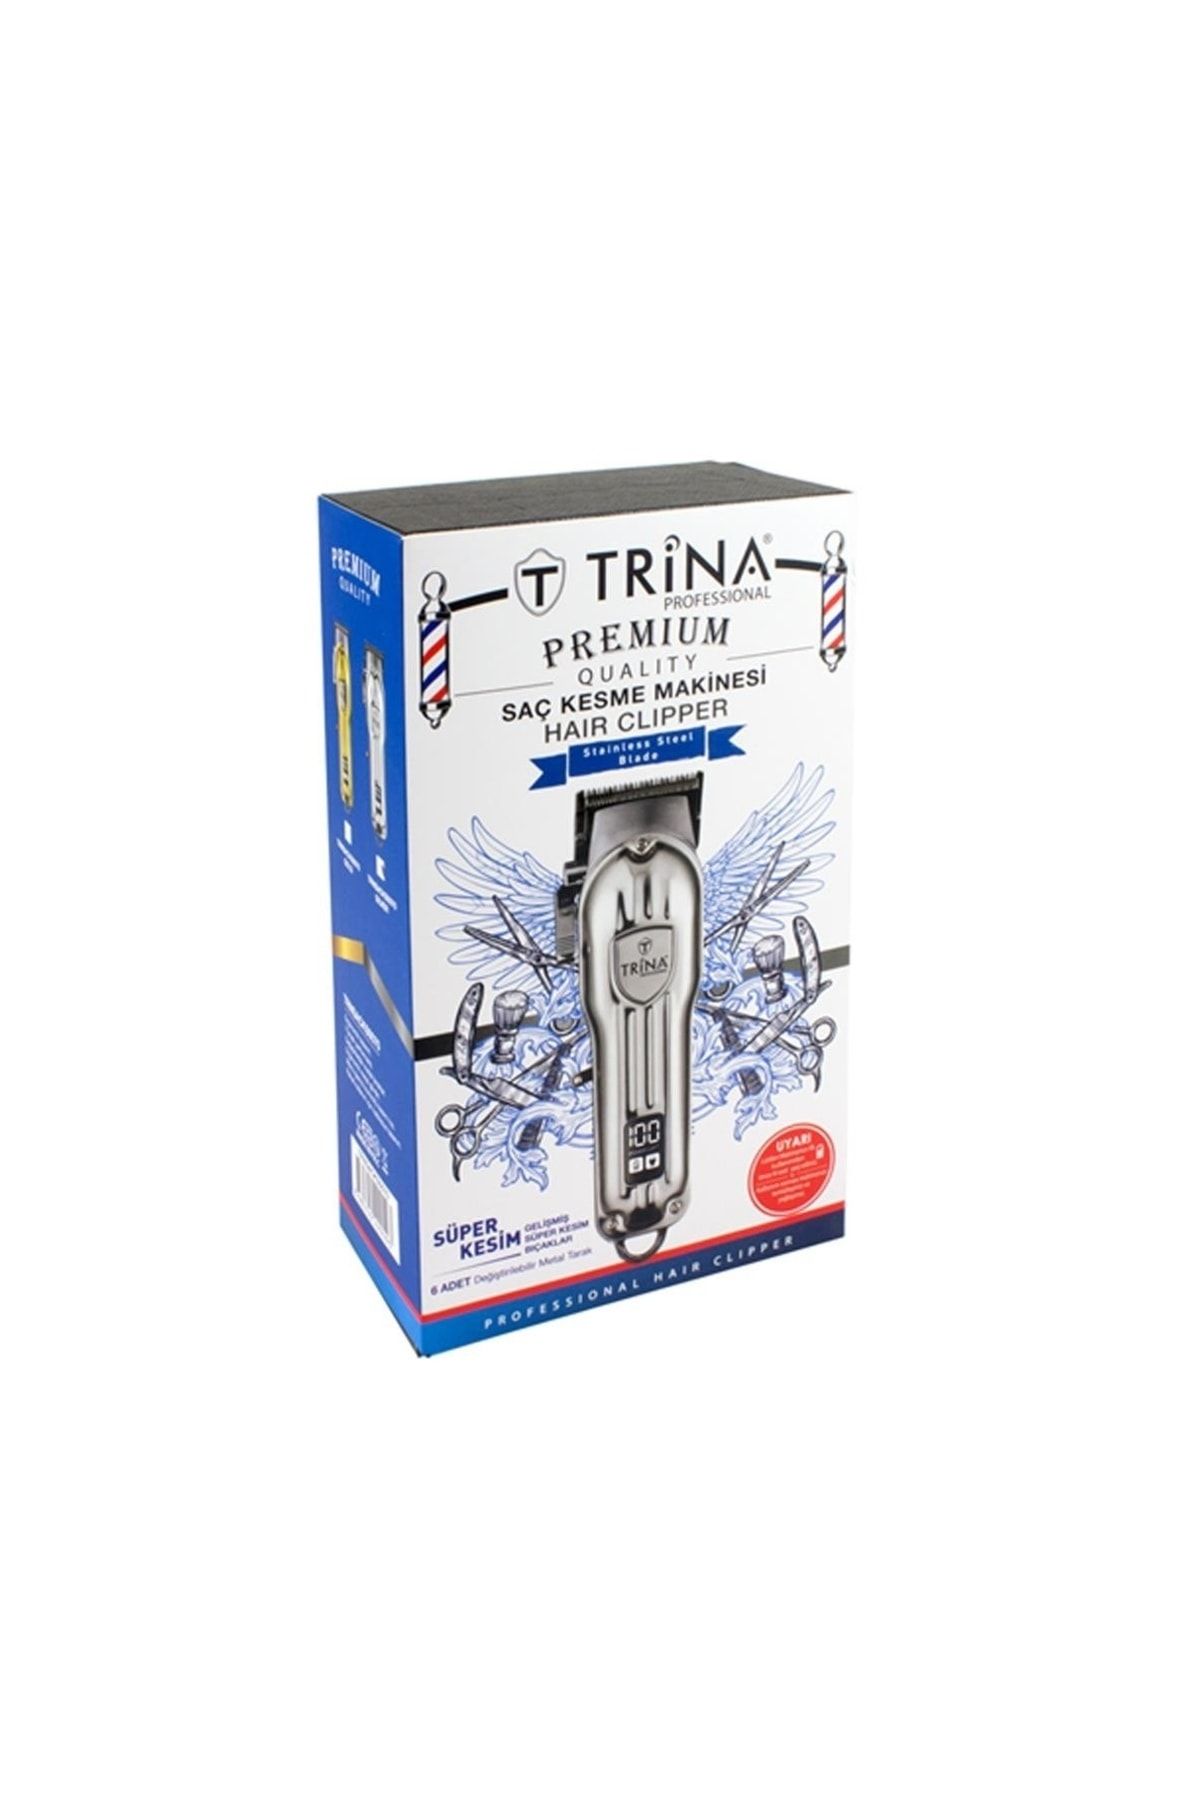 Trina Professional Hair Clipper Saç Kesme Makinesi (silver) Gümüş Renk Trnsacks0070